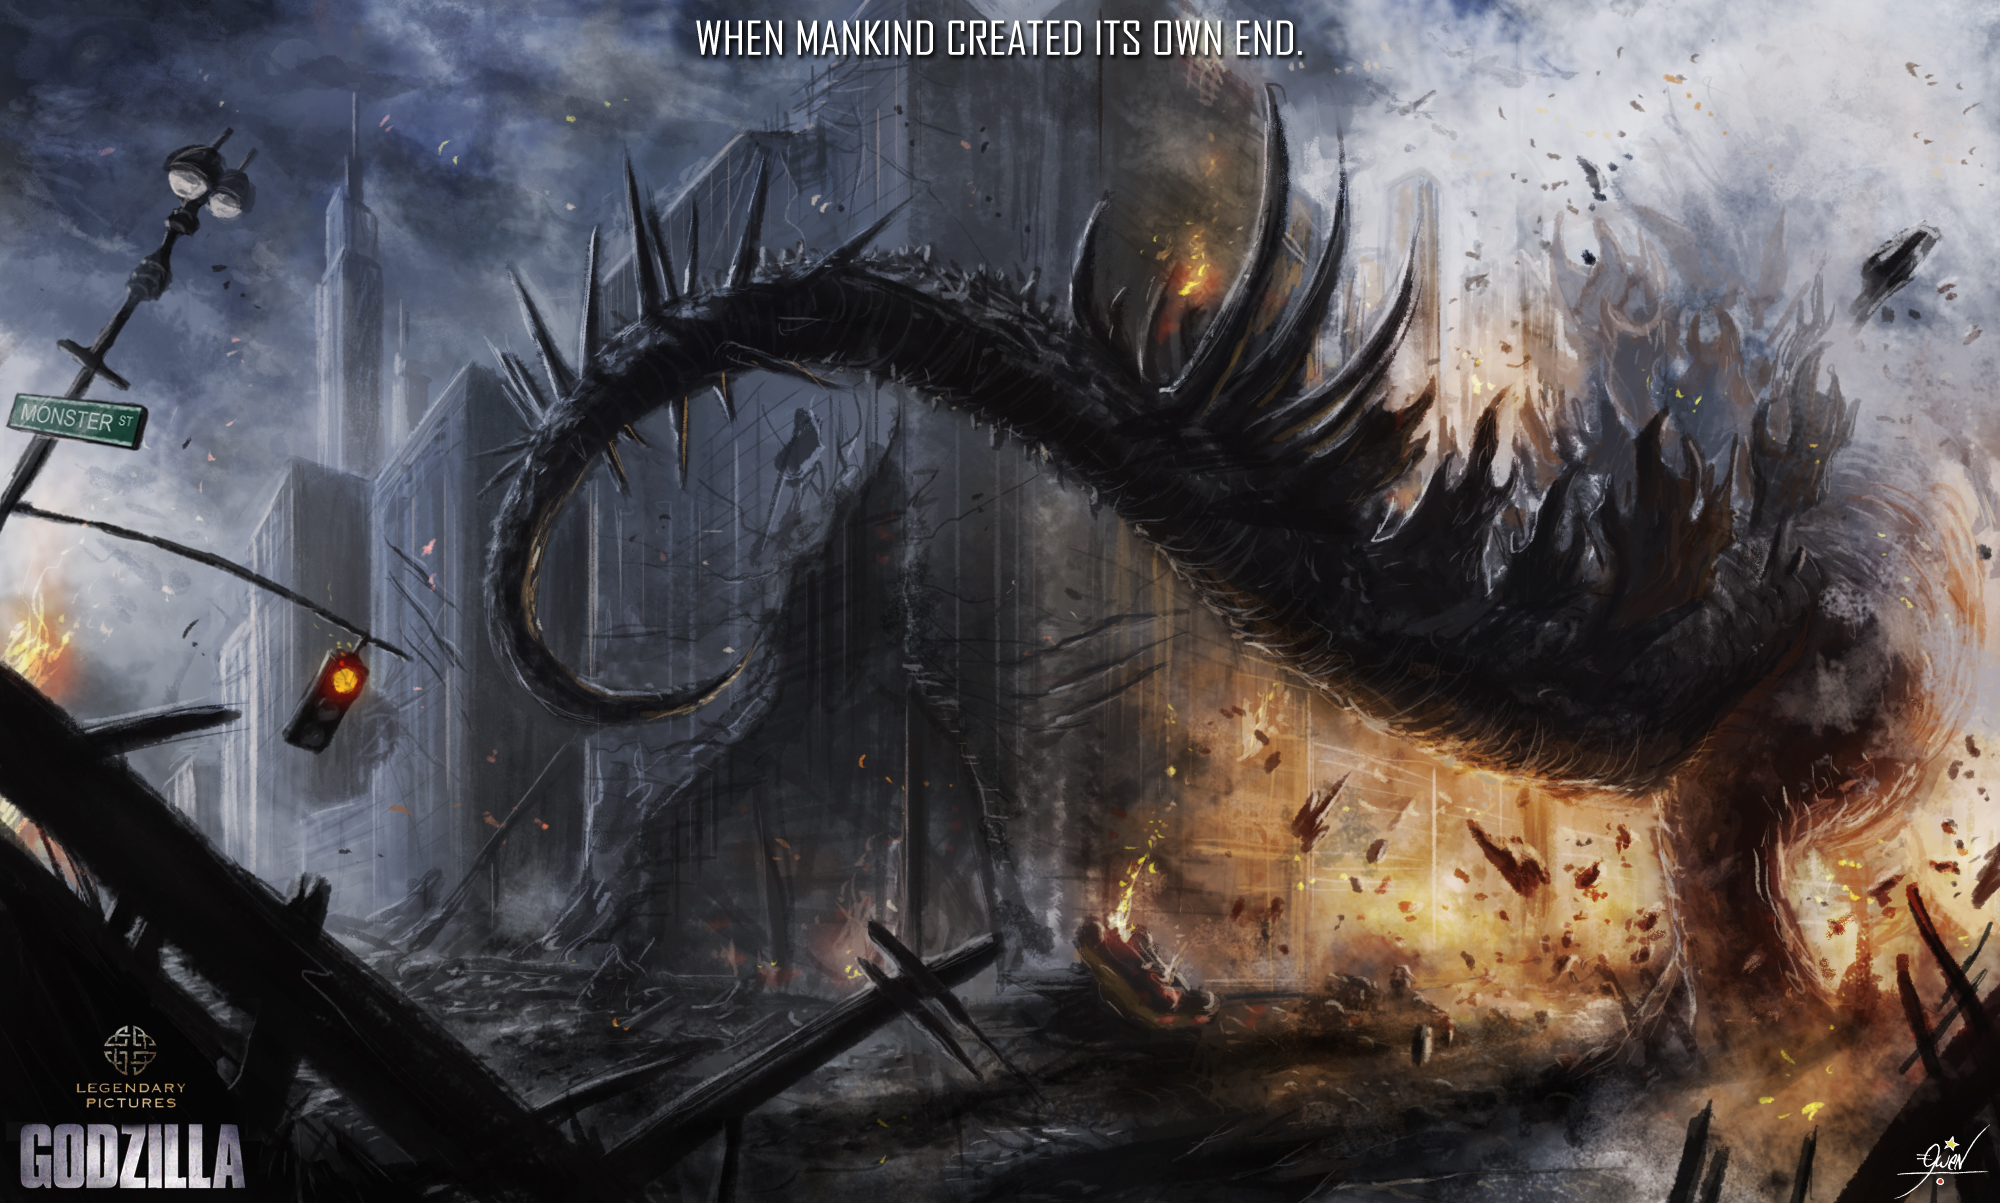  Movie HD Wallpaper Godzilla 2014 Illustration Movie HD Wallpaper